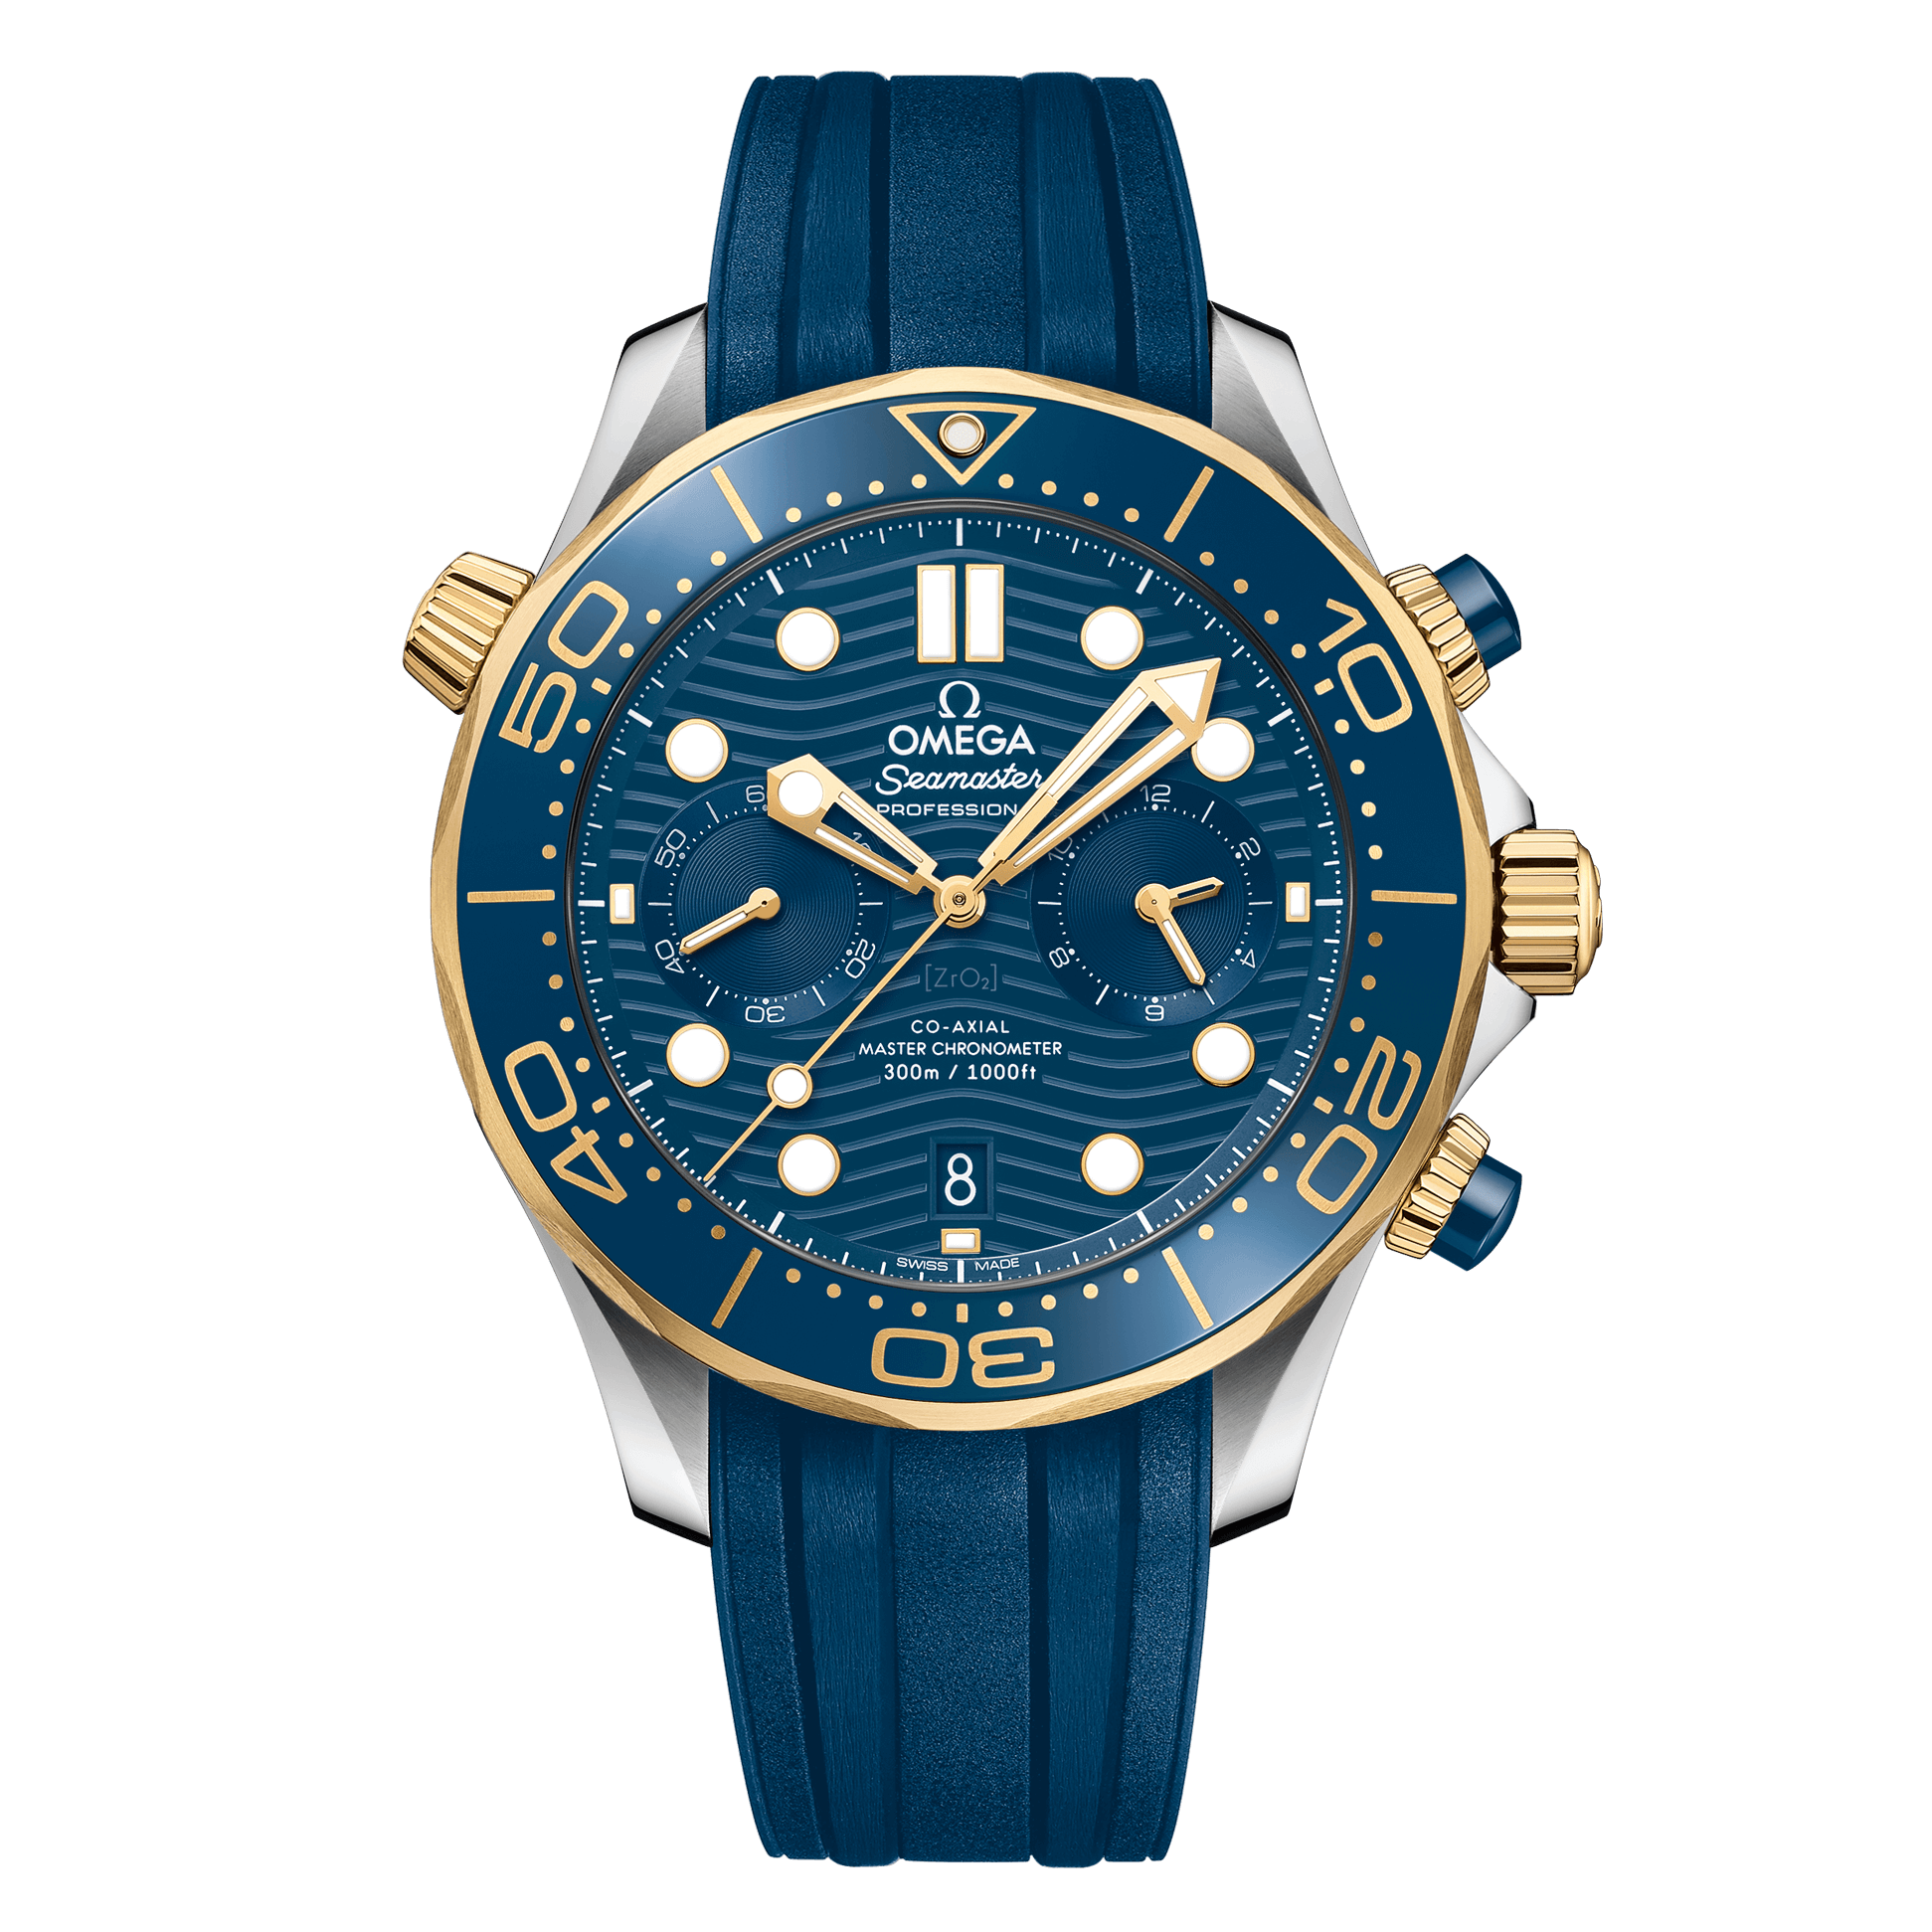 Omethtga Seamaster Diver 300m Co-Axial Master Chronometer Chronograph 44mm, Blue and Gold